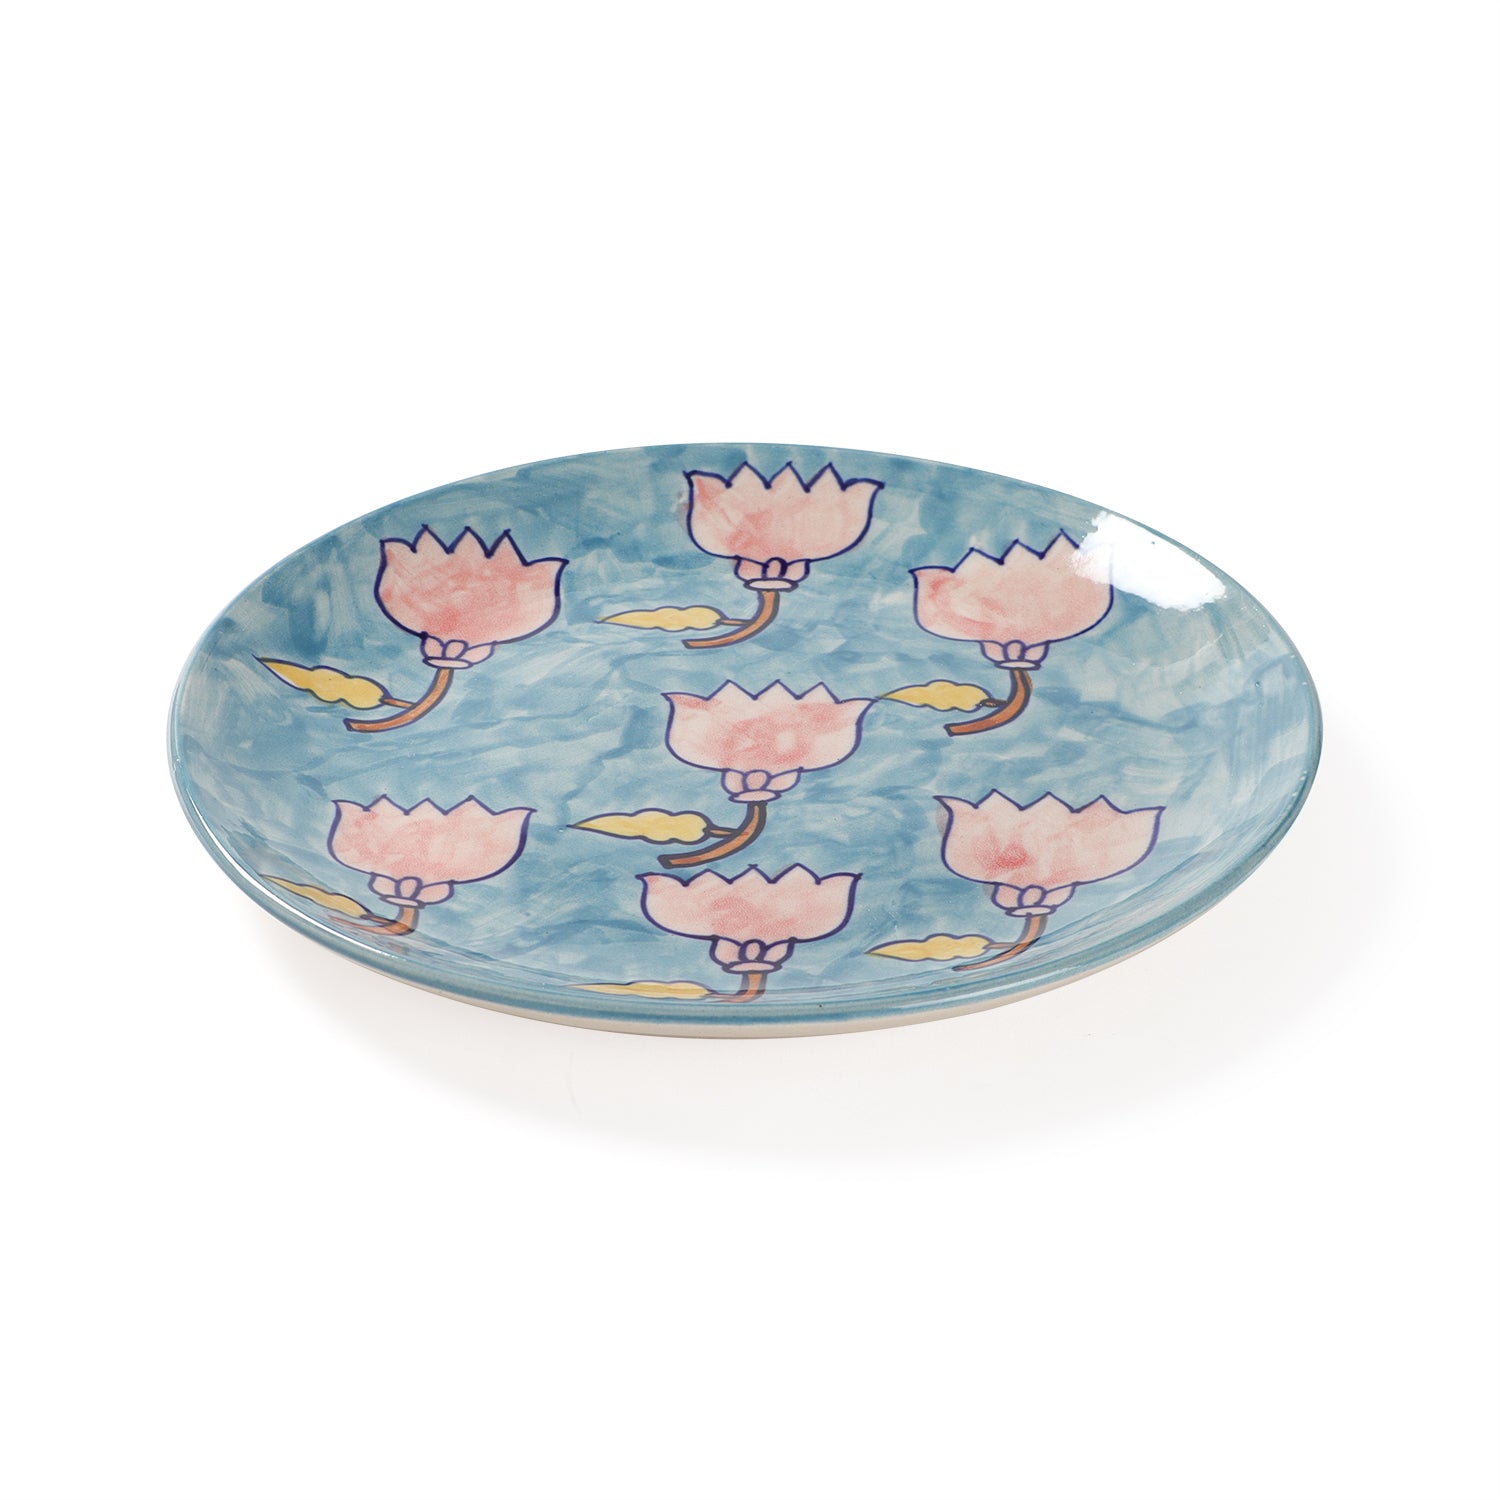 Handpainted Ceramic Dinner Plate 10"